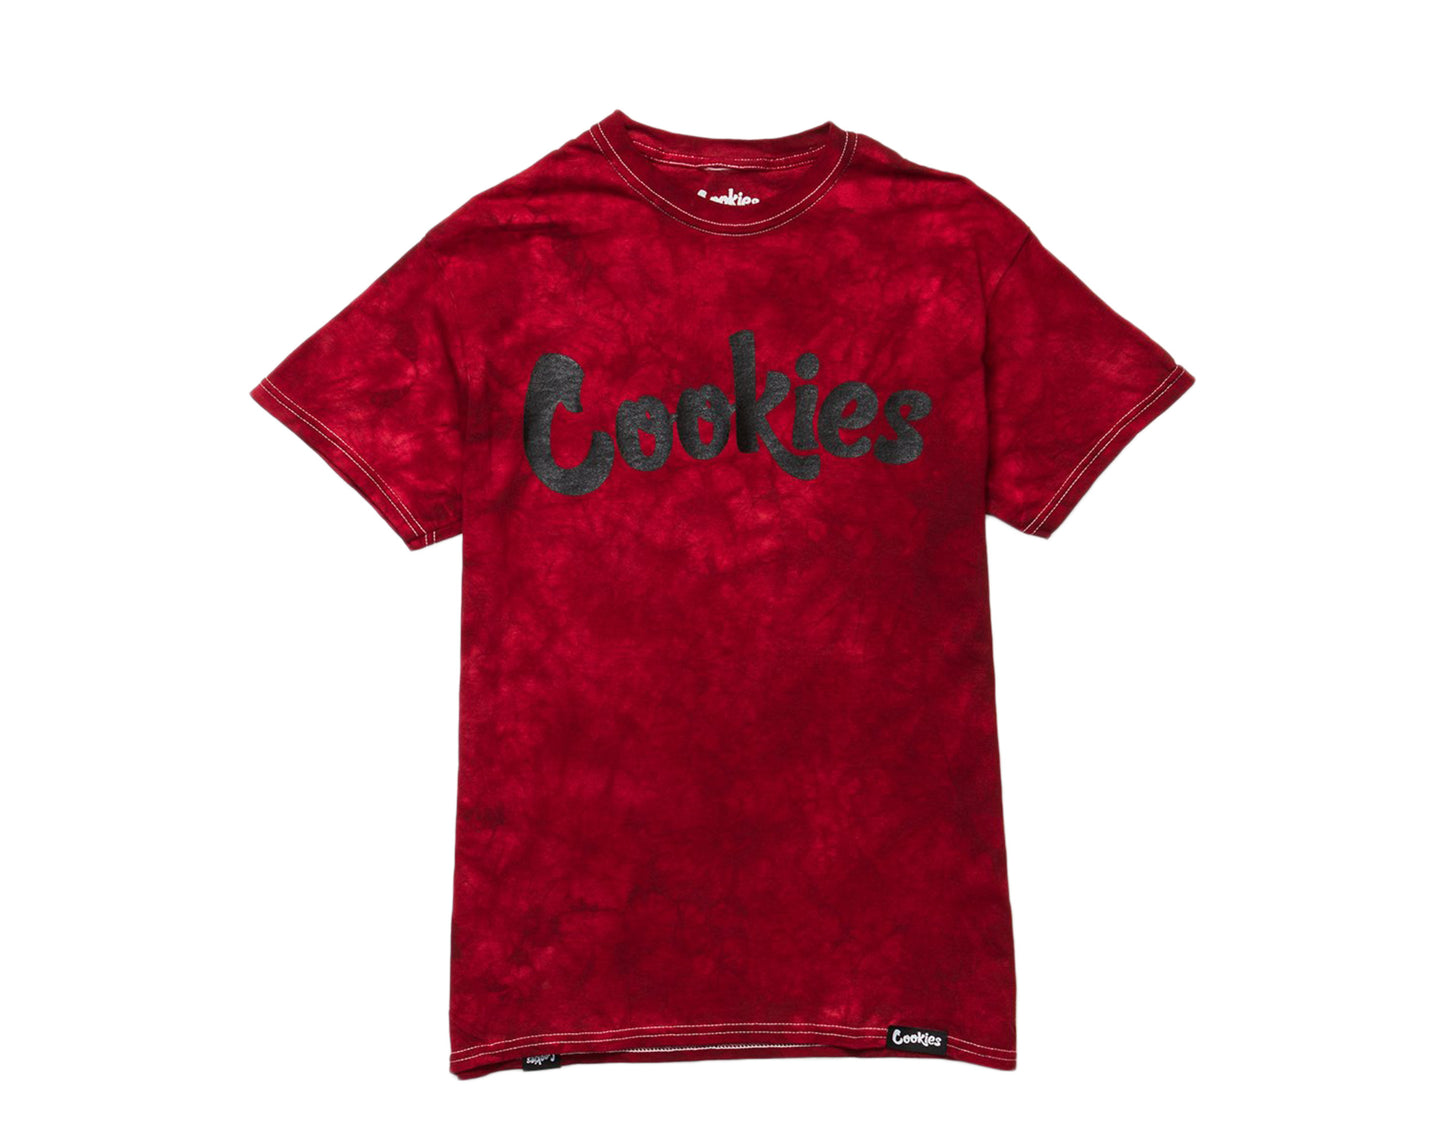 Cookies Original Logo Crystal Wash Tie Dye Red/Black T-Shirt 1544T4197-RED